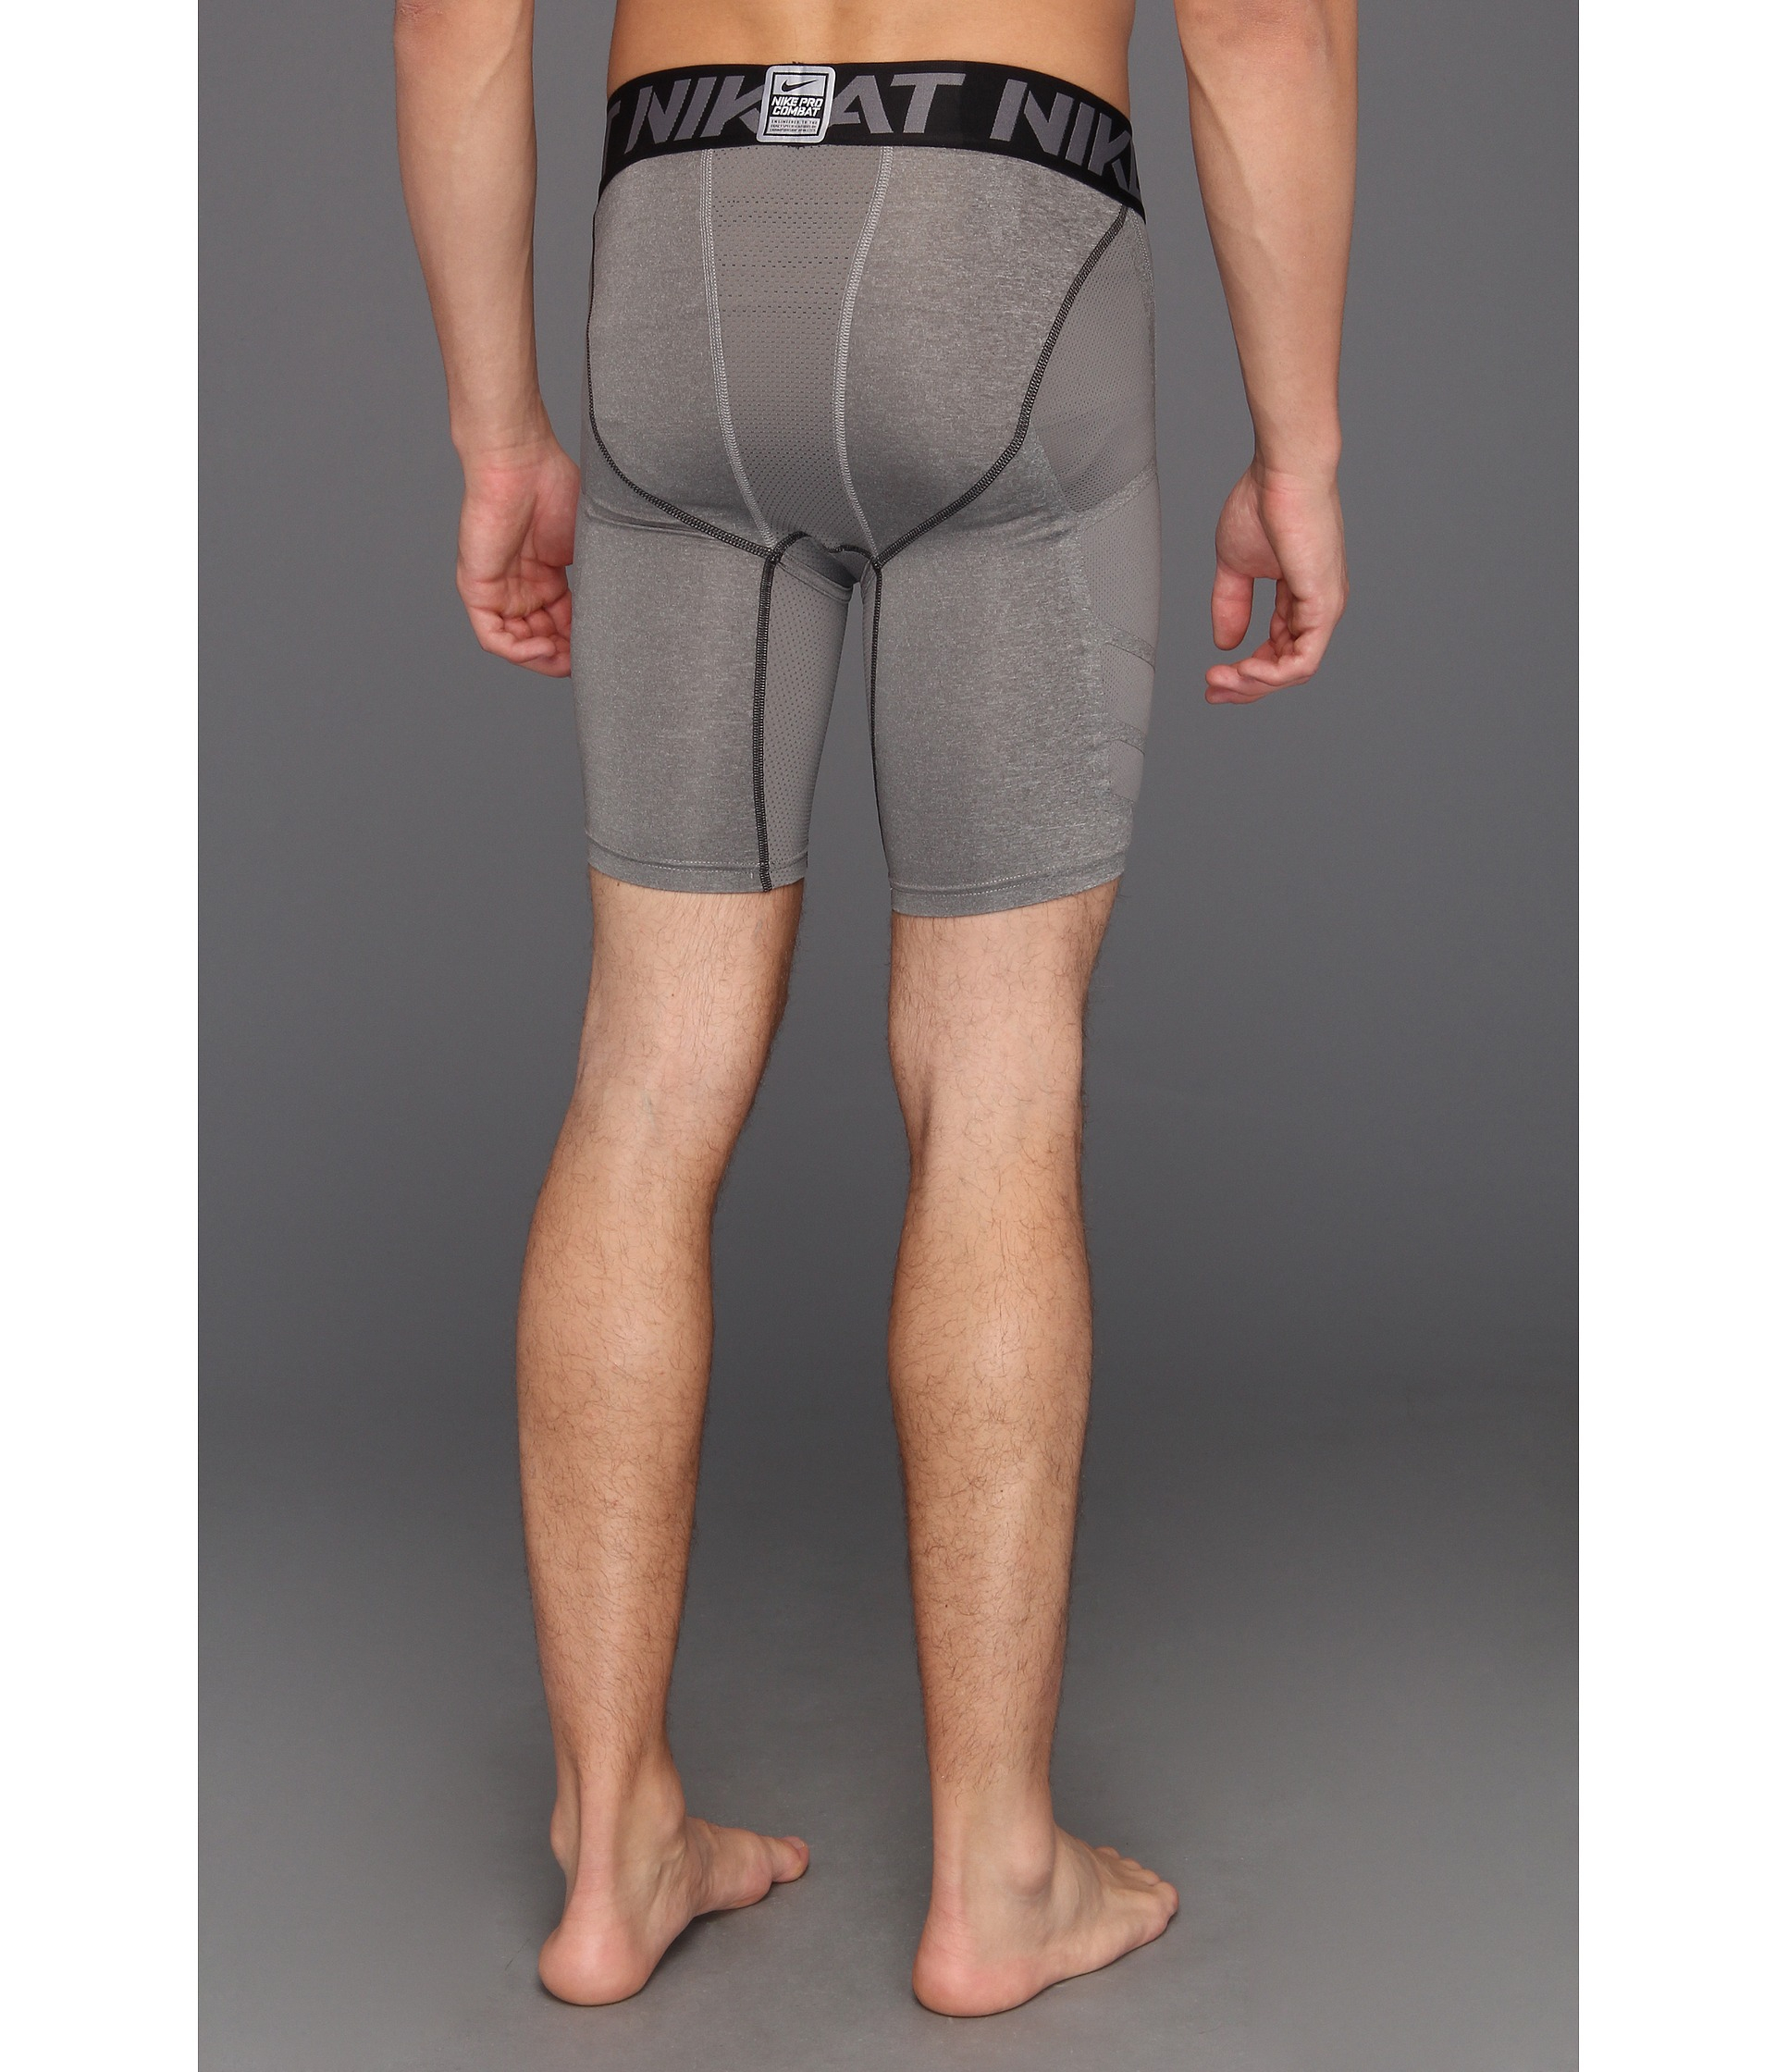 nike pro 9 inch compression shorts